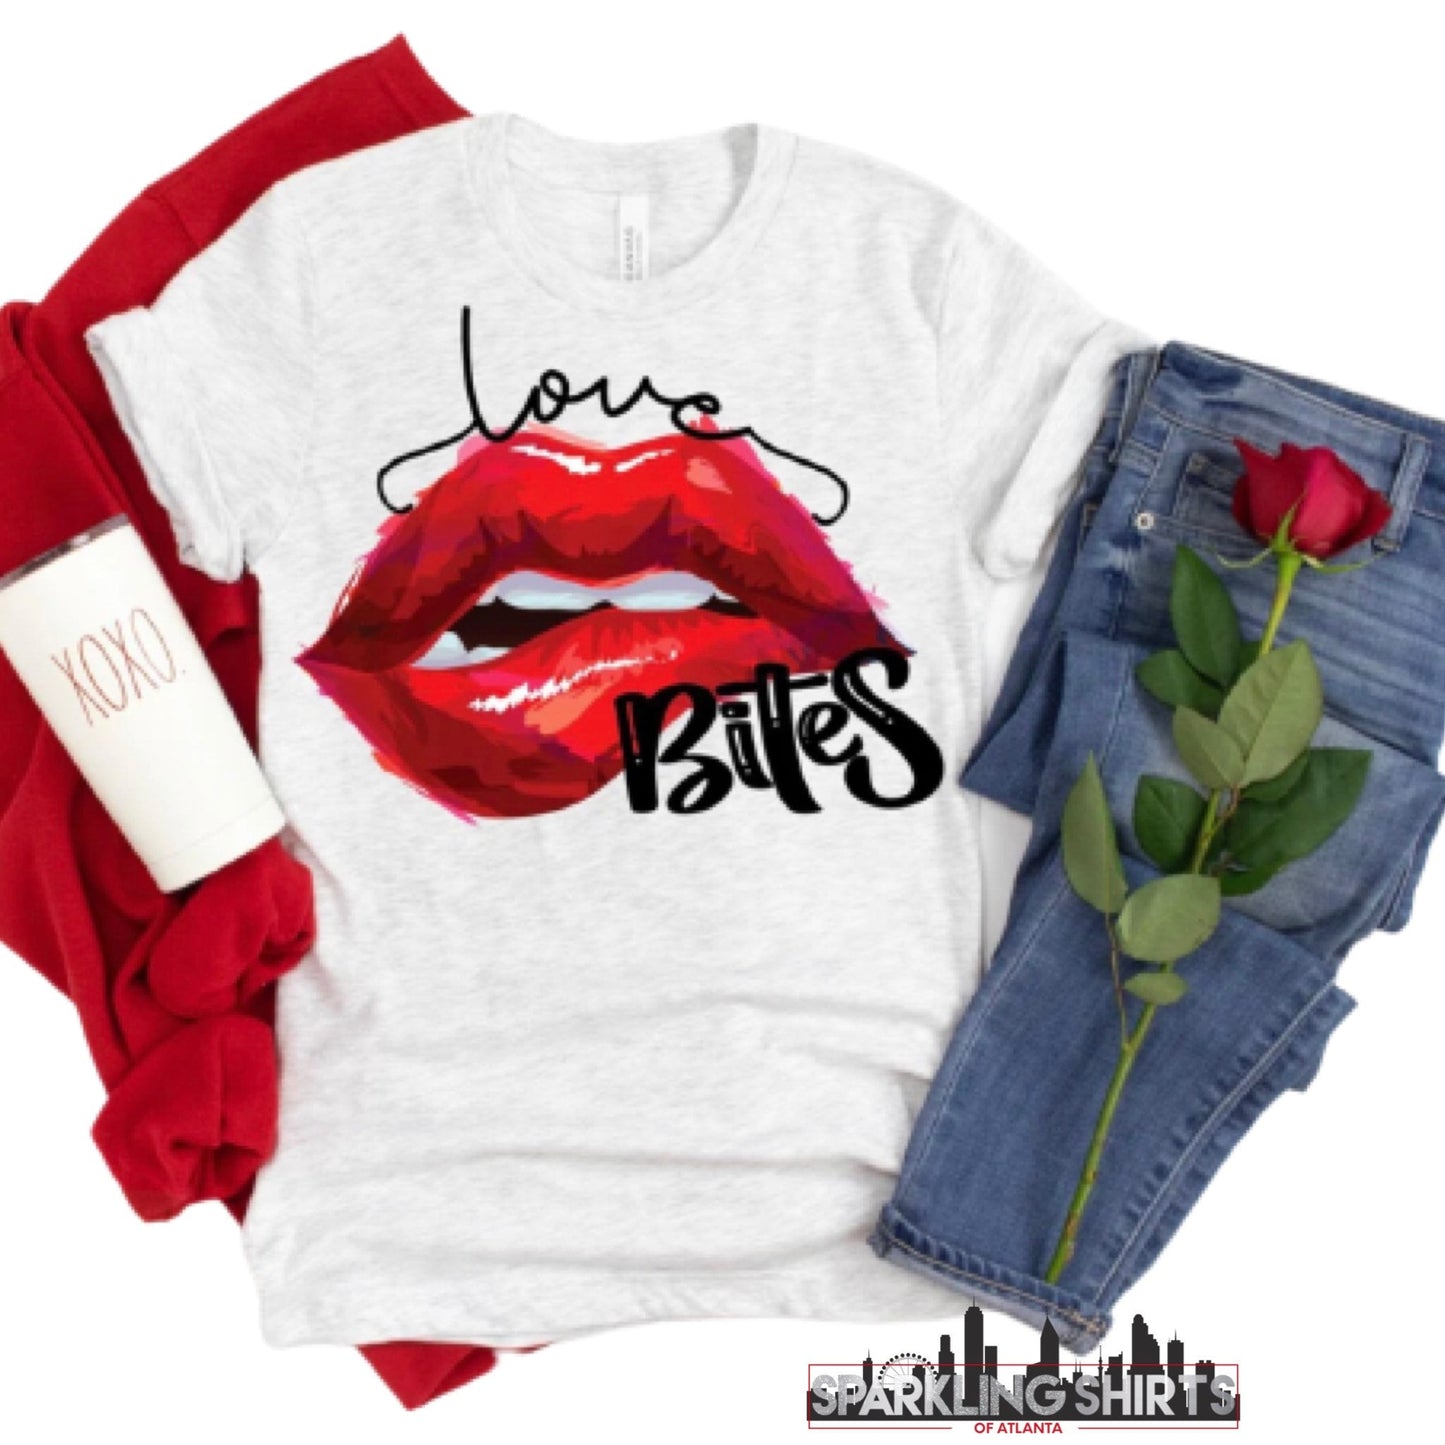 Love Bites| Lipstick| Sassy Tee | Sarcastic Tee| Sexy Tee| Graphic T-shirt